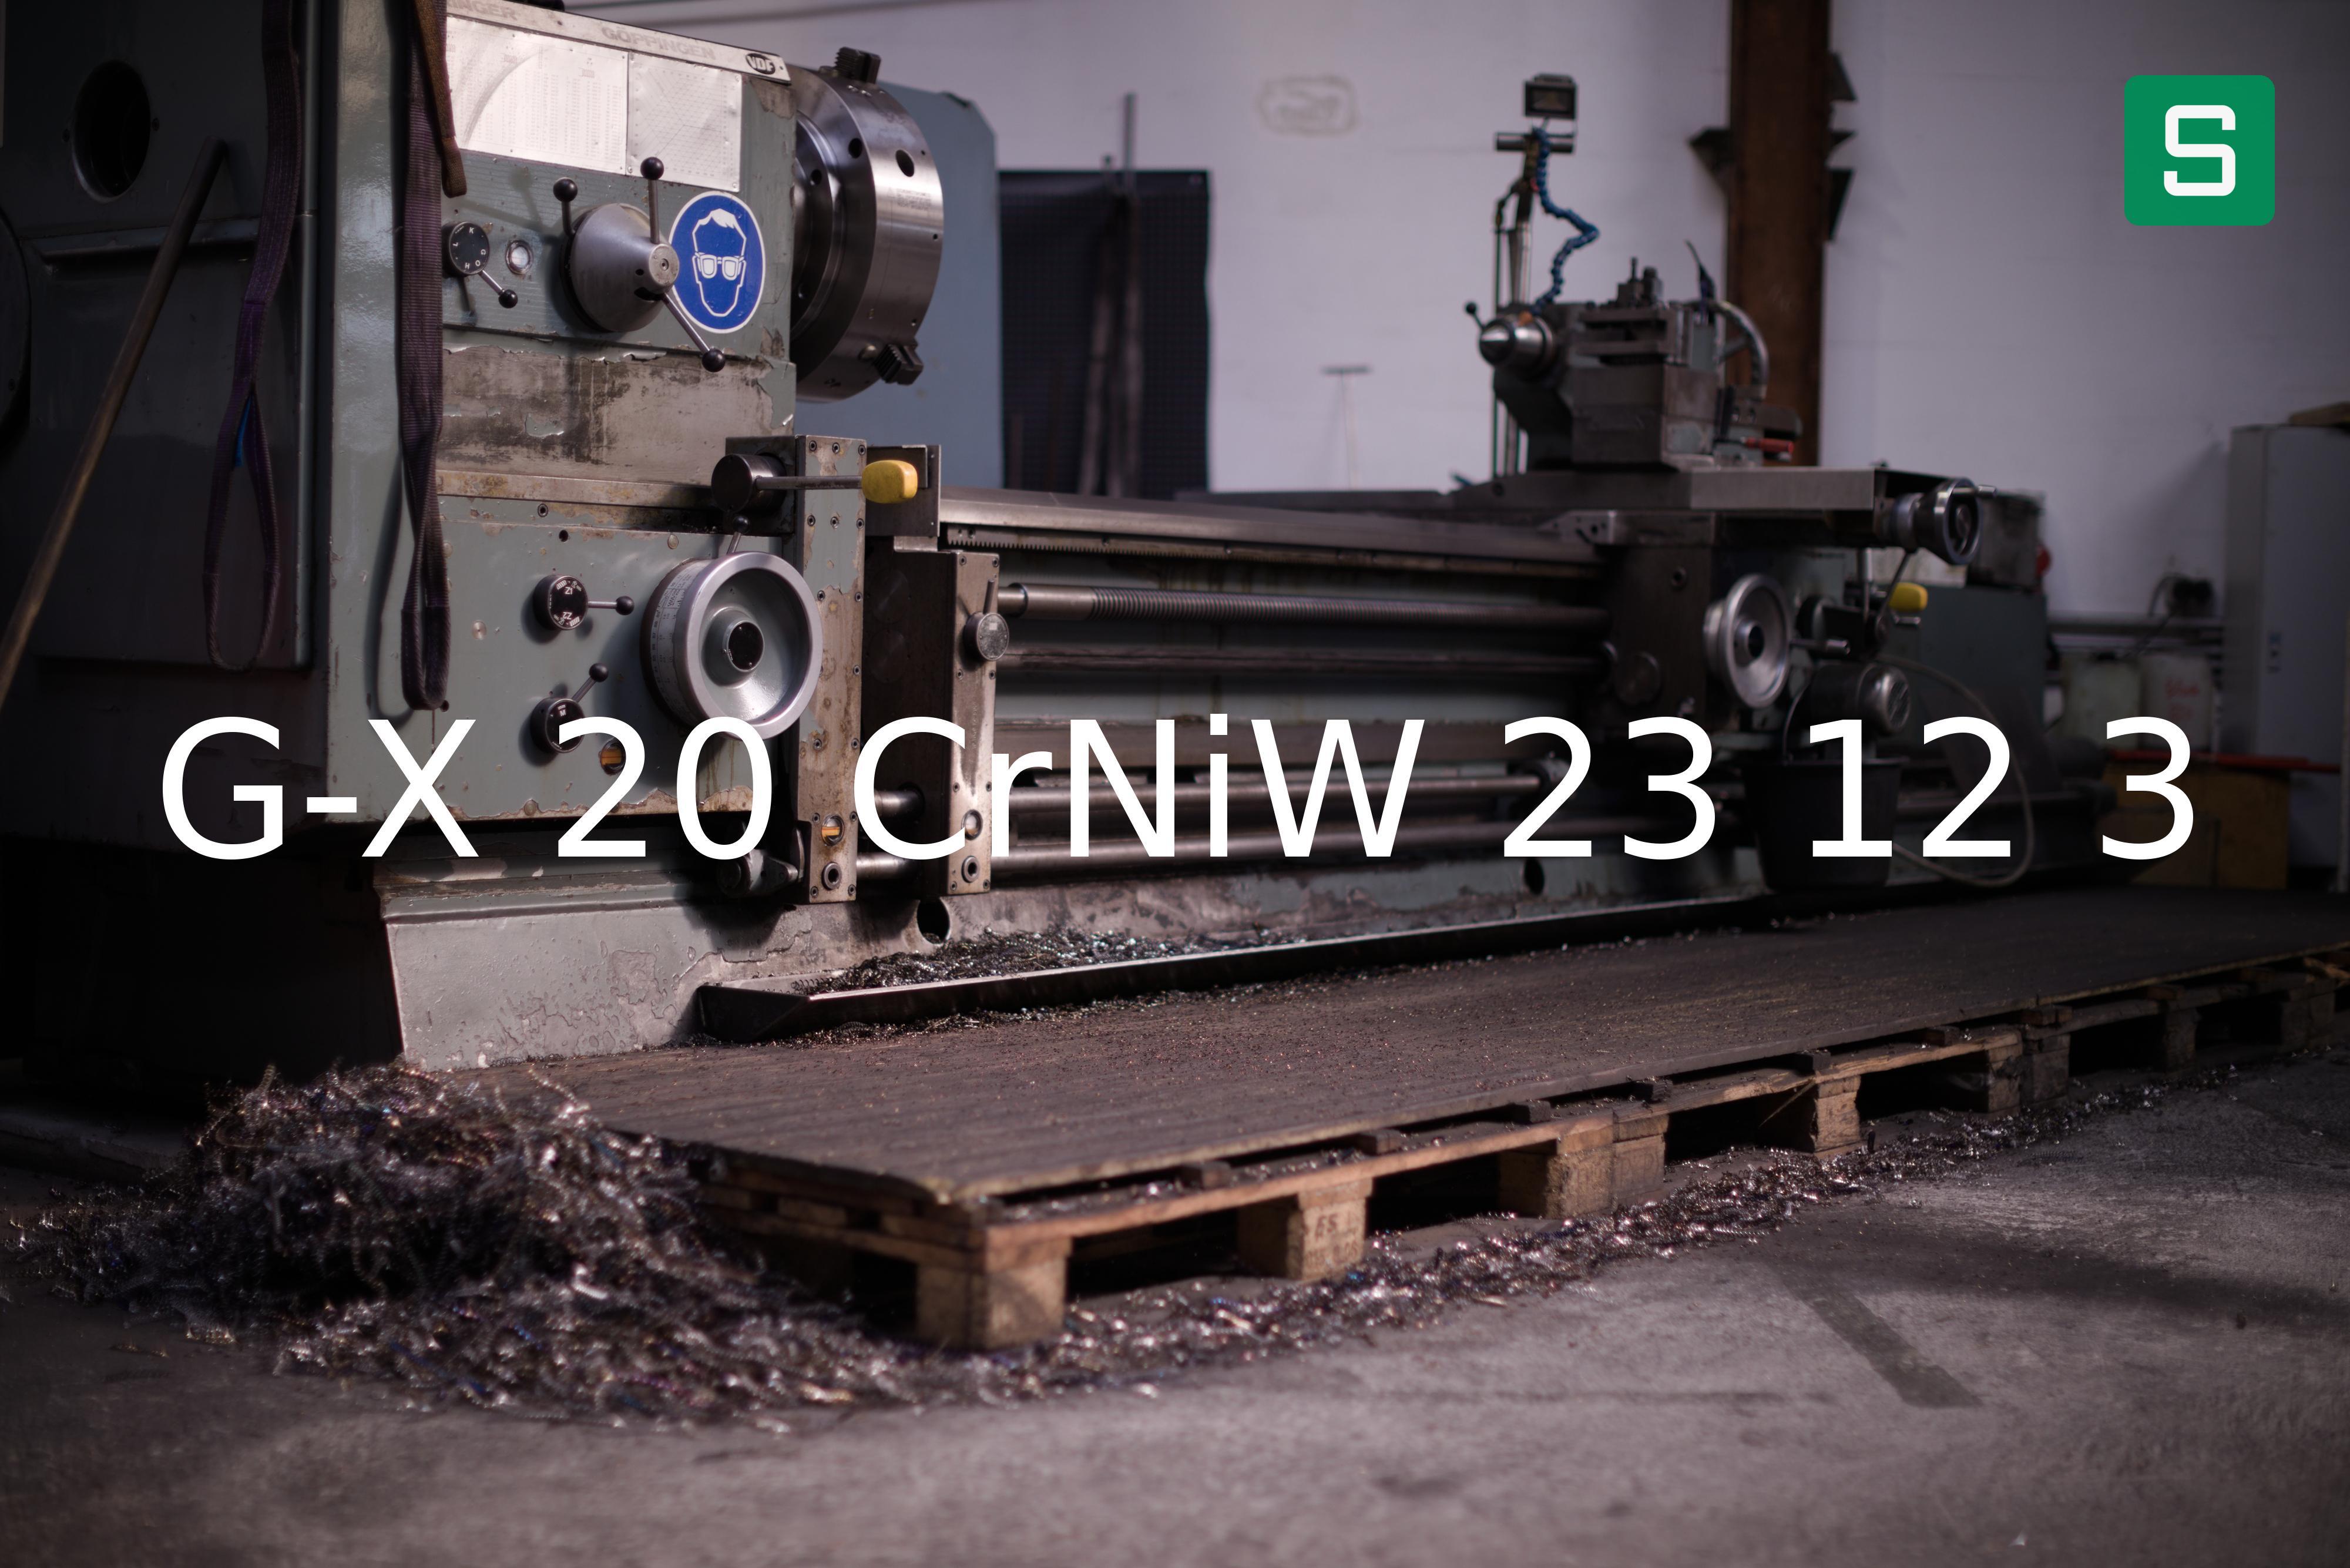 Steel Material: G-X 20 CrNiW 23 12 3